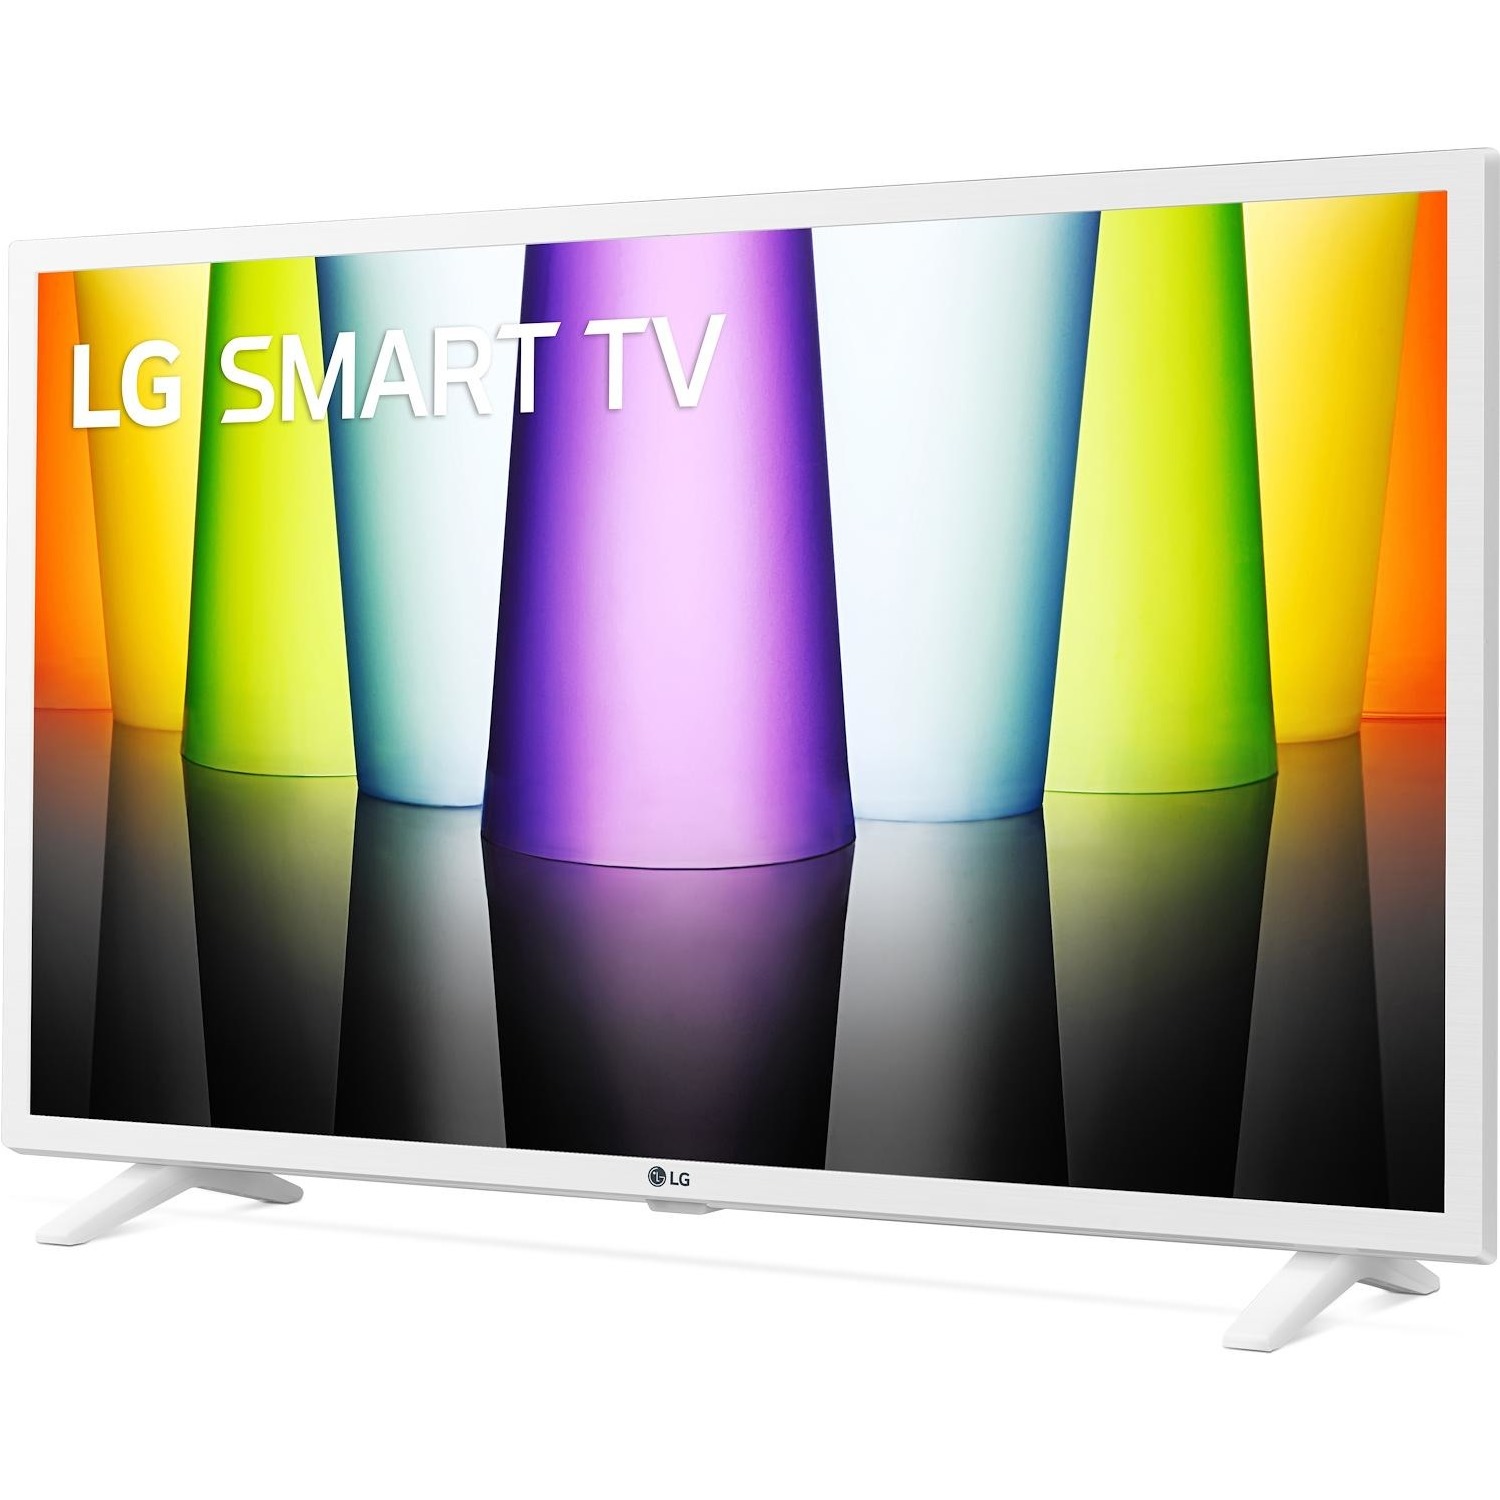 Immagine per TV LED Smart LG 32LQ63806 bianco da DIMOStore